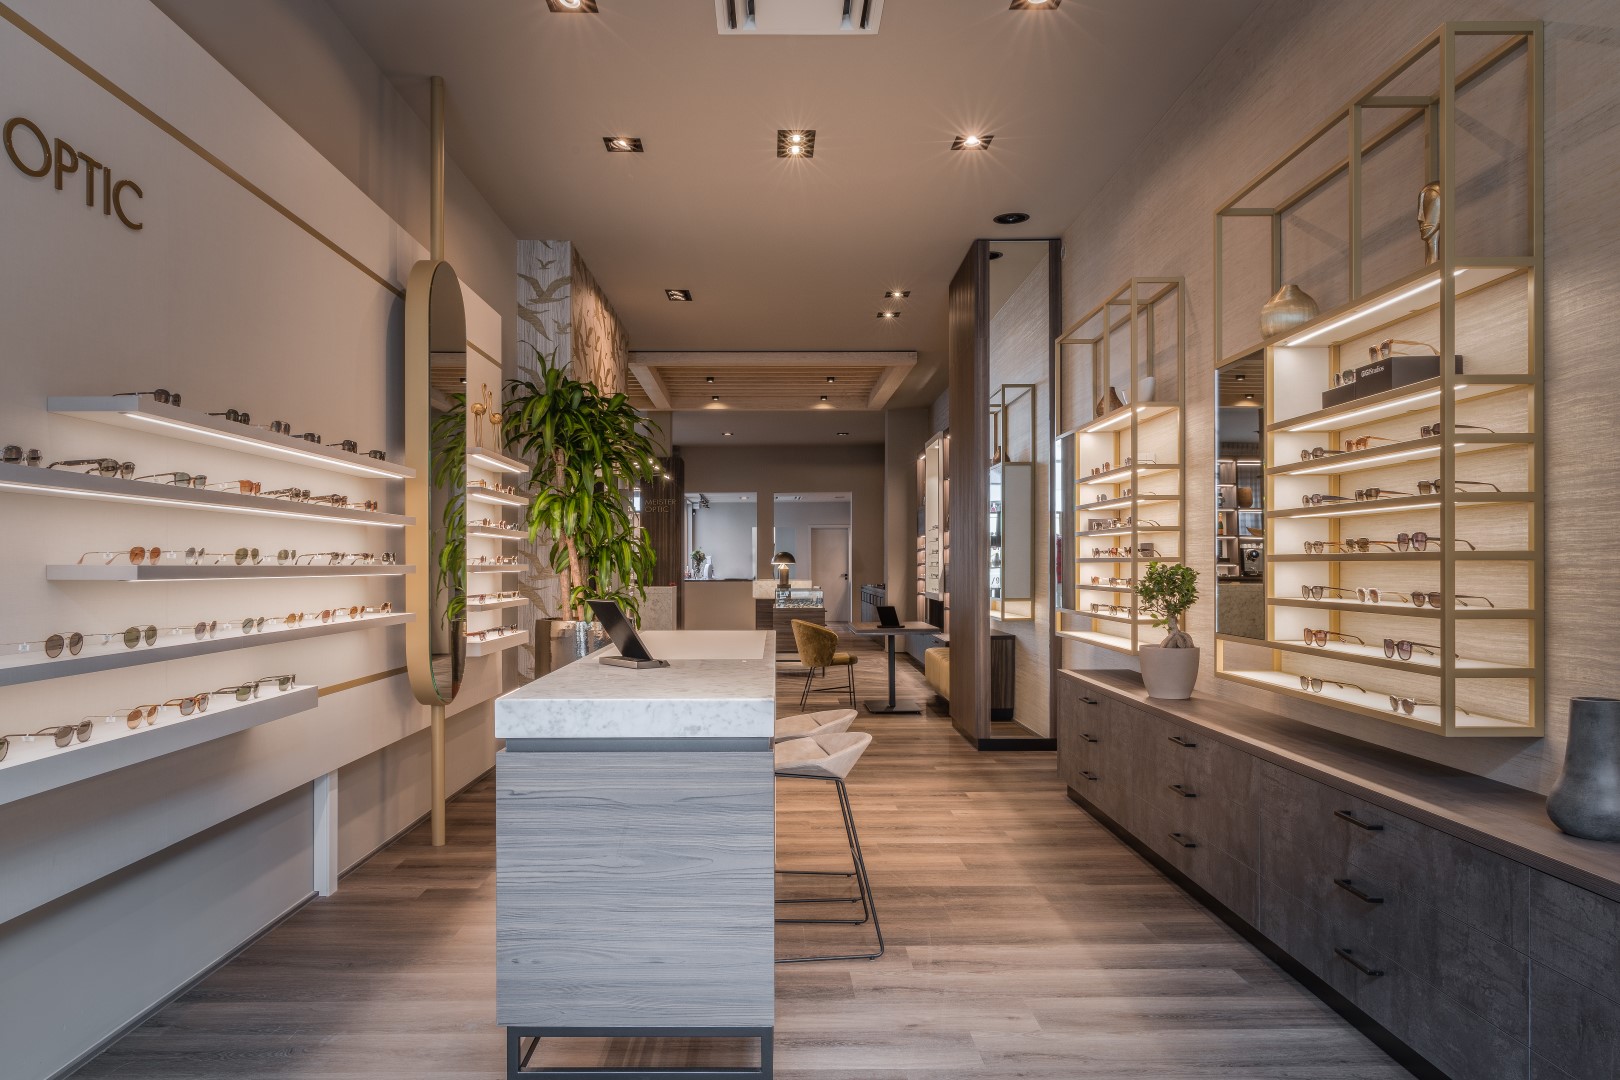 Luxury interior for opticians by WSB Shopfitting